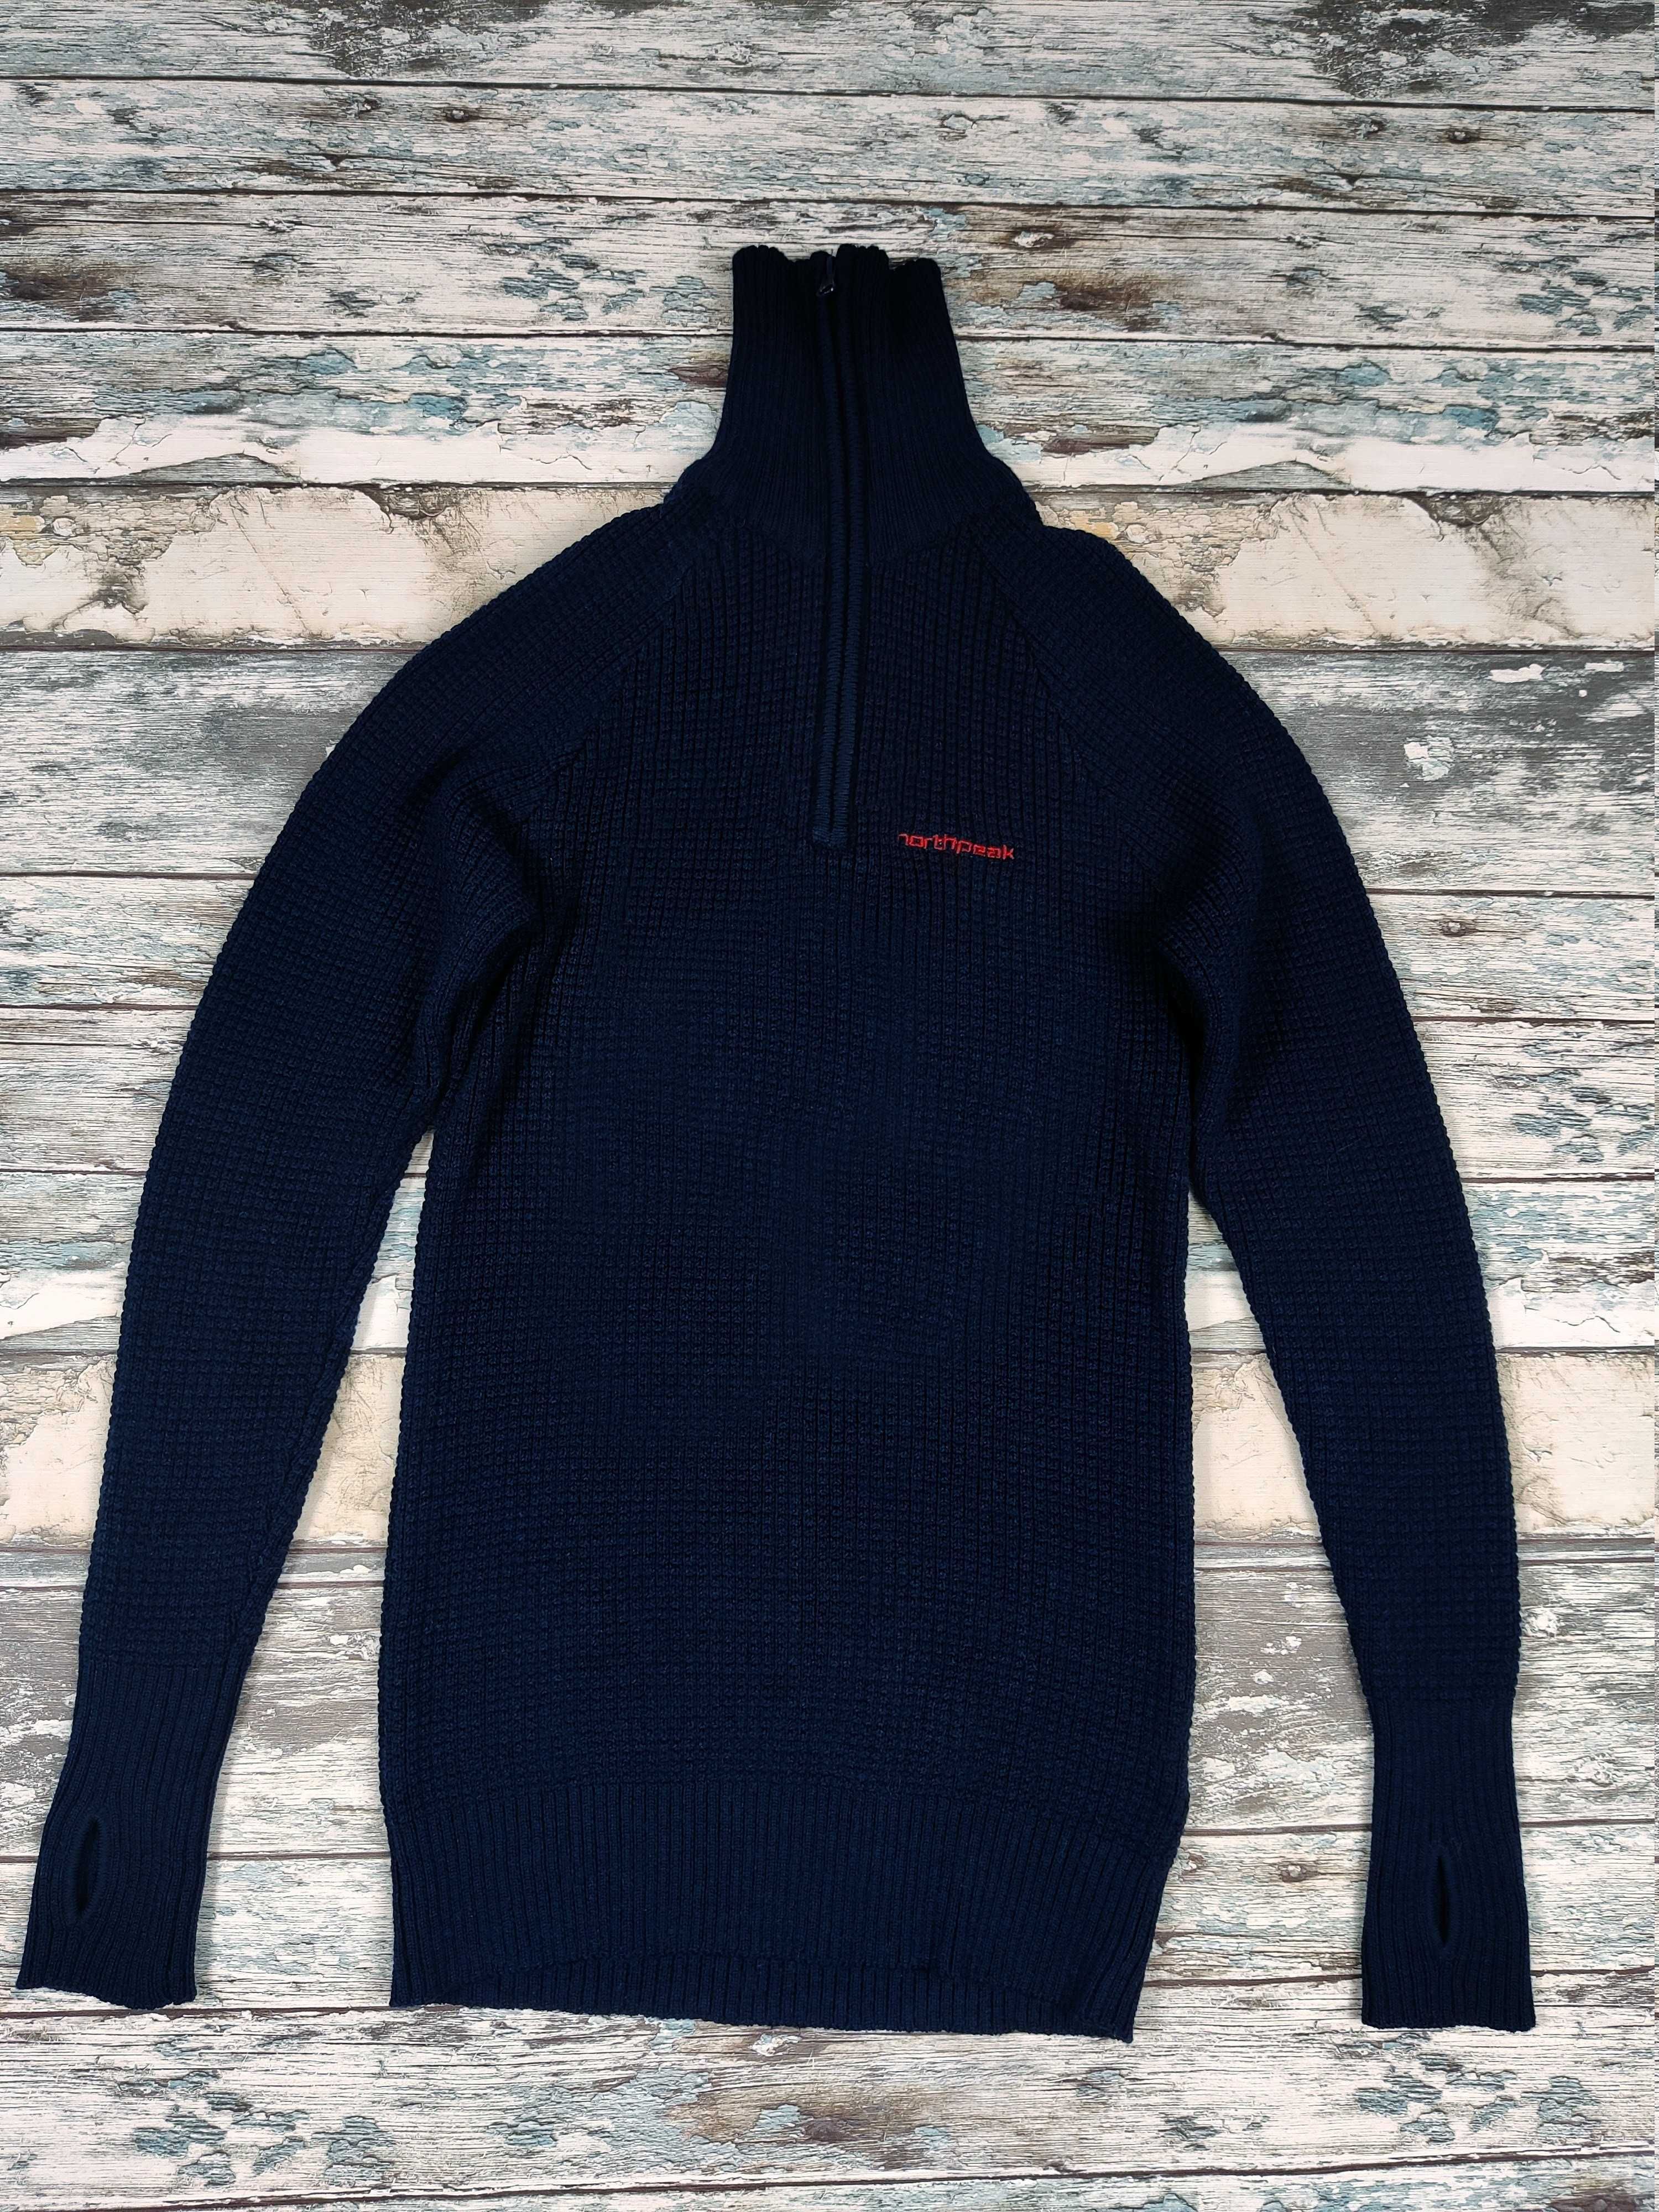 NorthPeak sweter 100% merinociemny granat stójka zip M